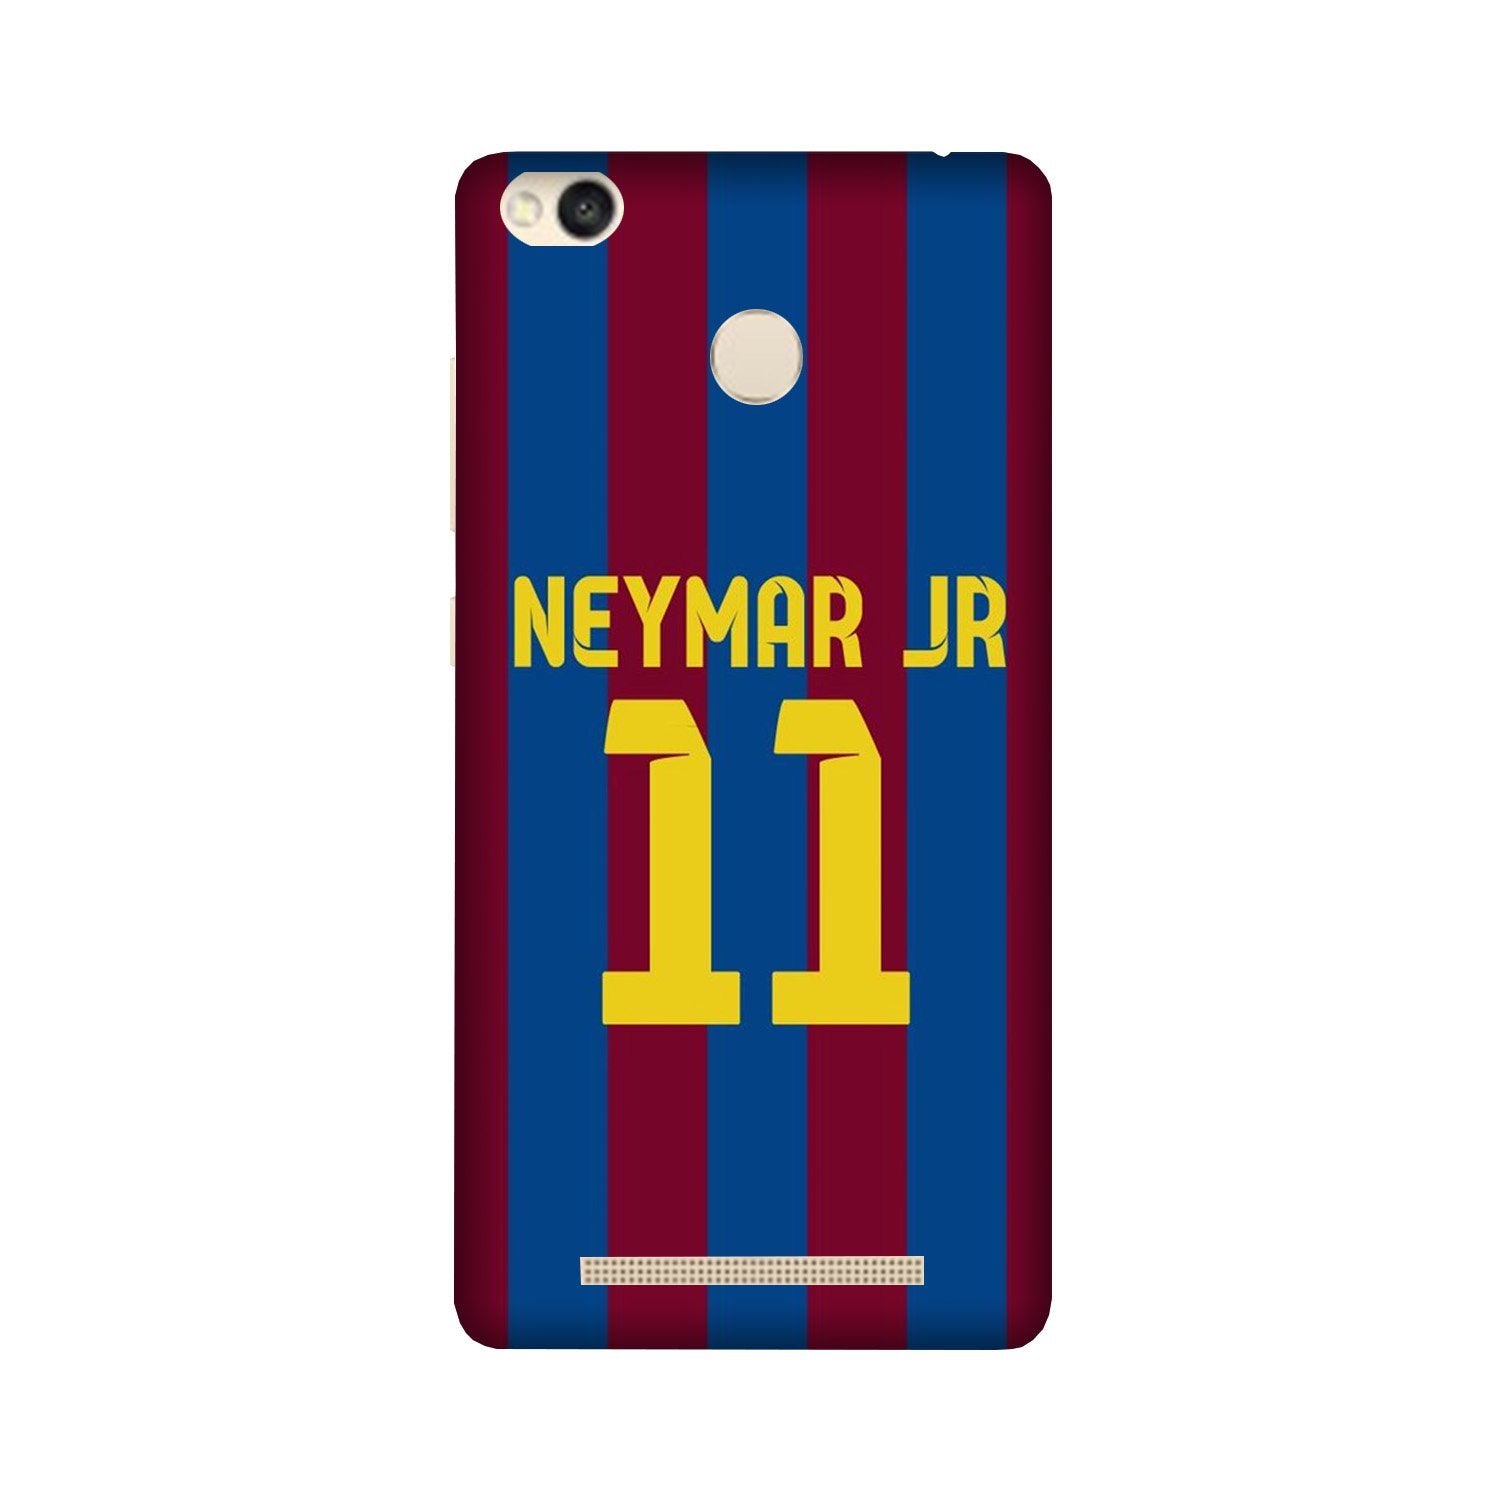 Neymar Jr Case for Redmi 3S Prime  (Design - 162)